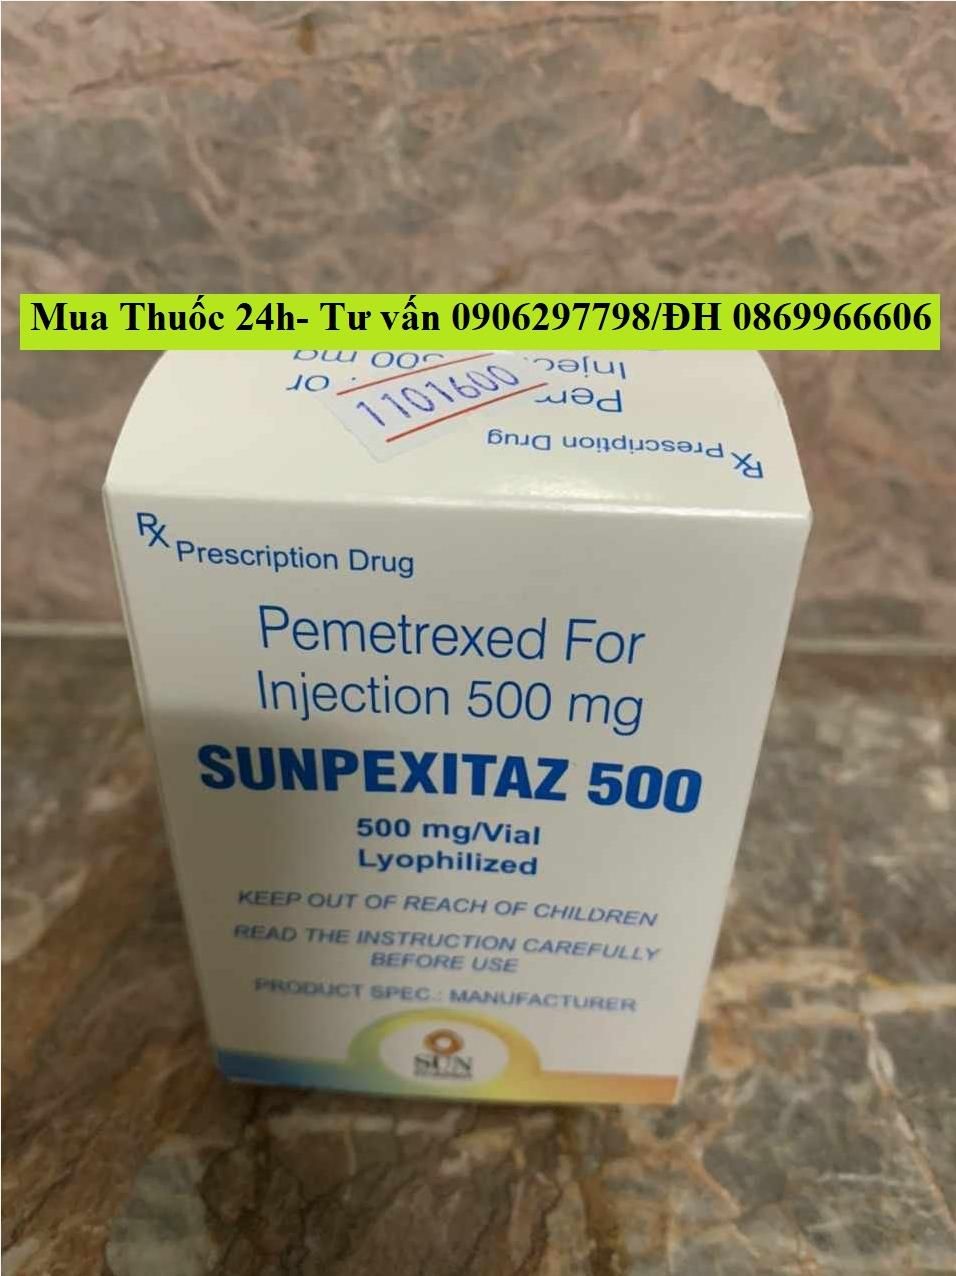 Thuốc Sunpexitaz 500mg Pemeterxed giá bao nhiêu mua ở đâu?